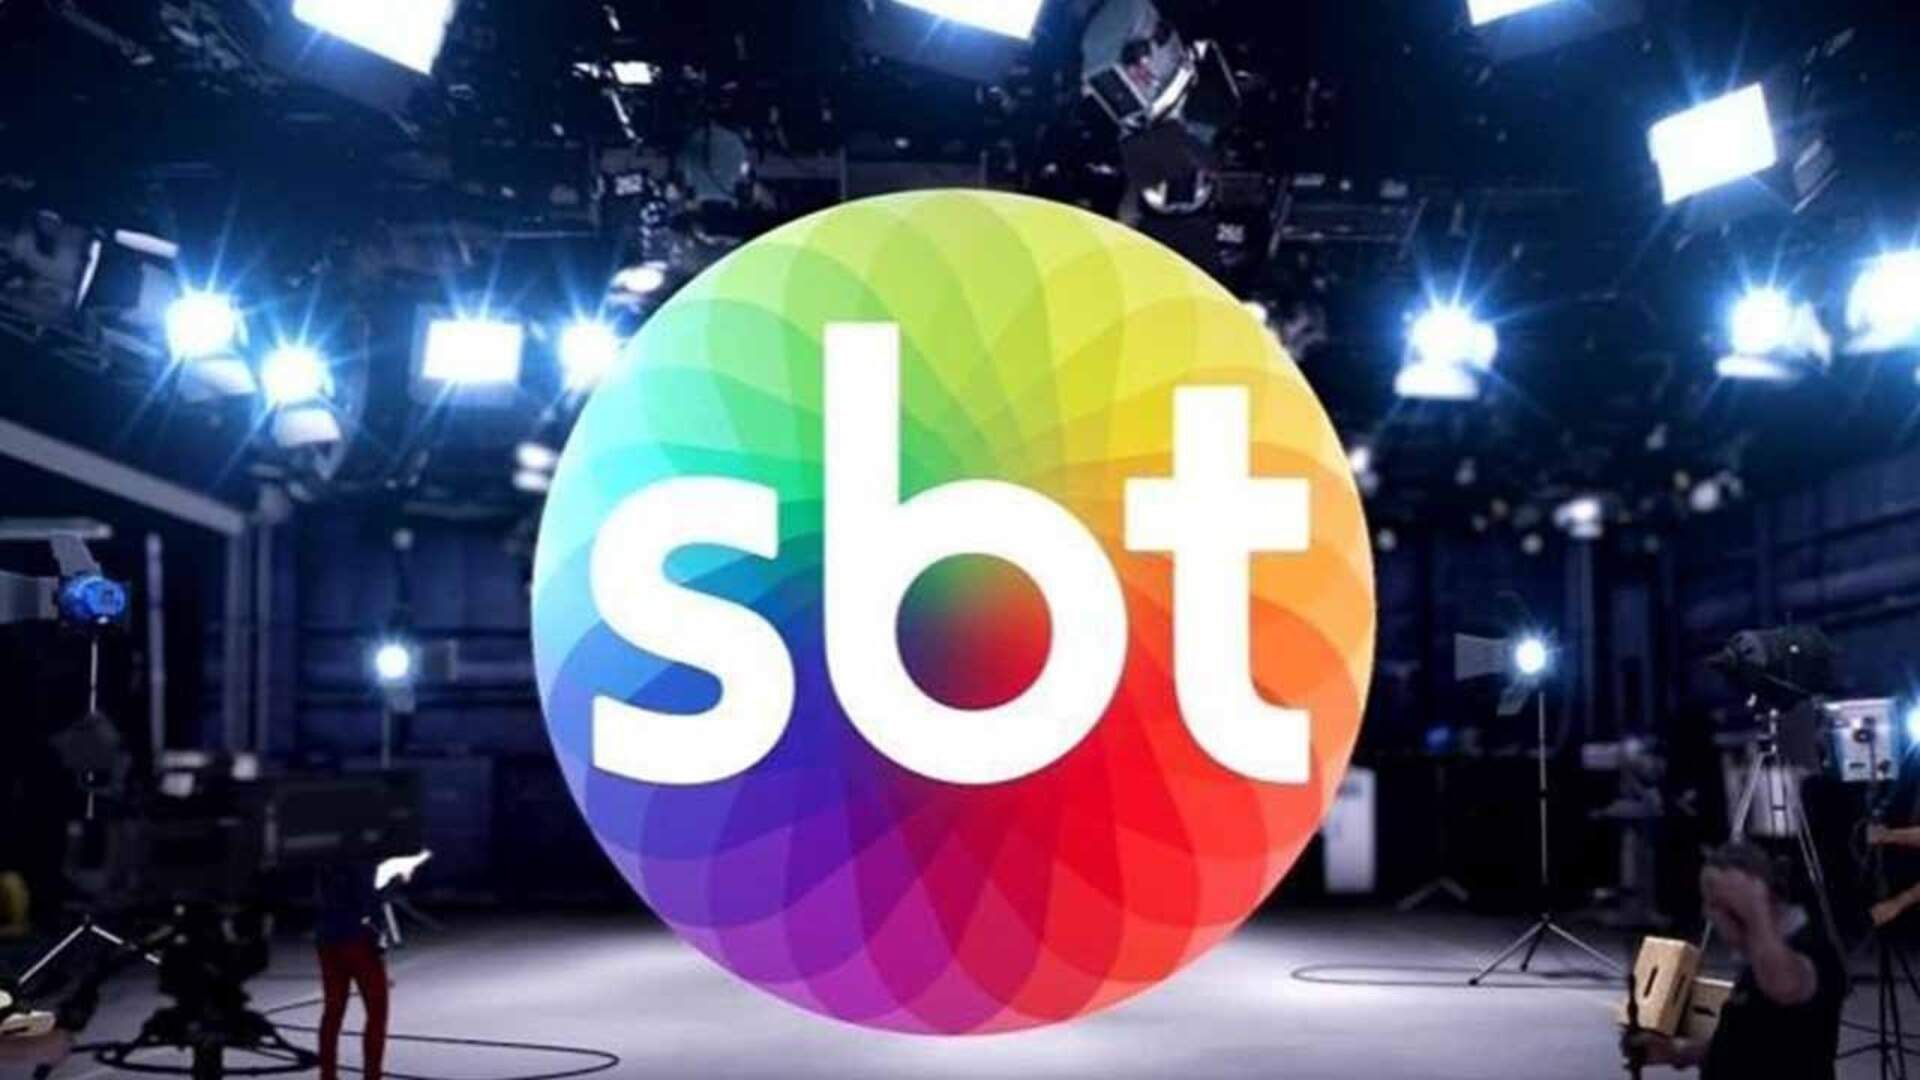 Cancelando tudo? SBT enfrenta crise nos bastidores e estreia dos novos programas é ameaçada - Metropolitana FM